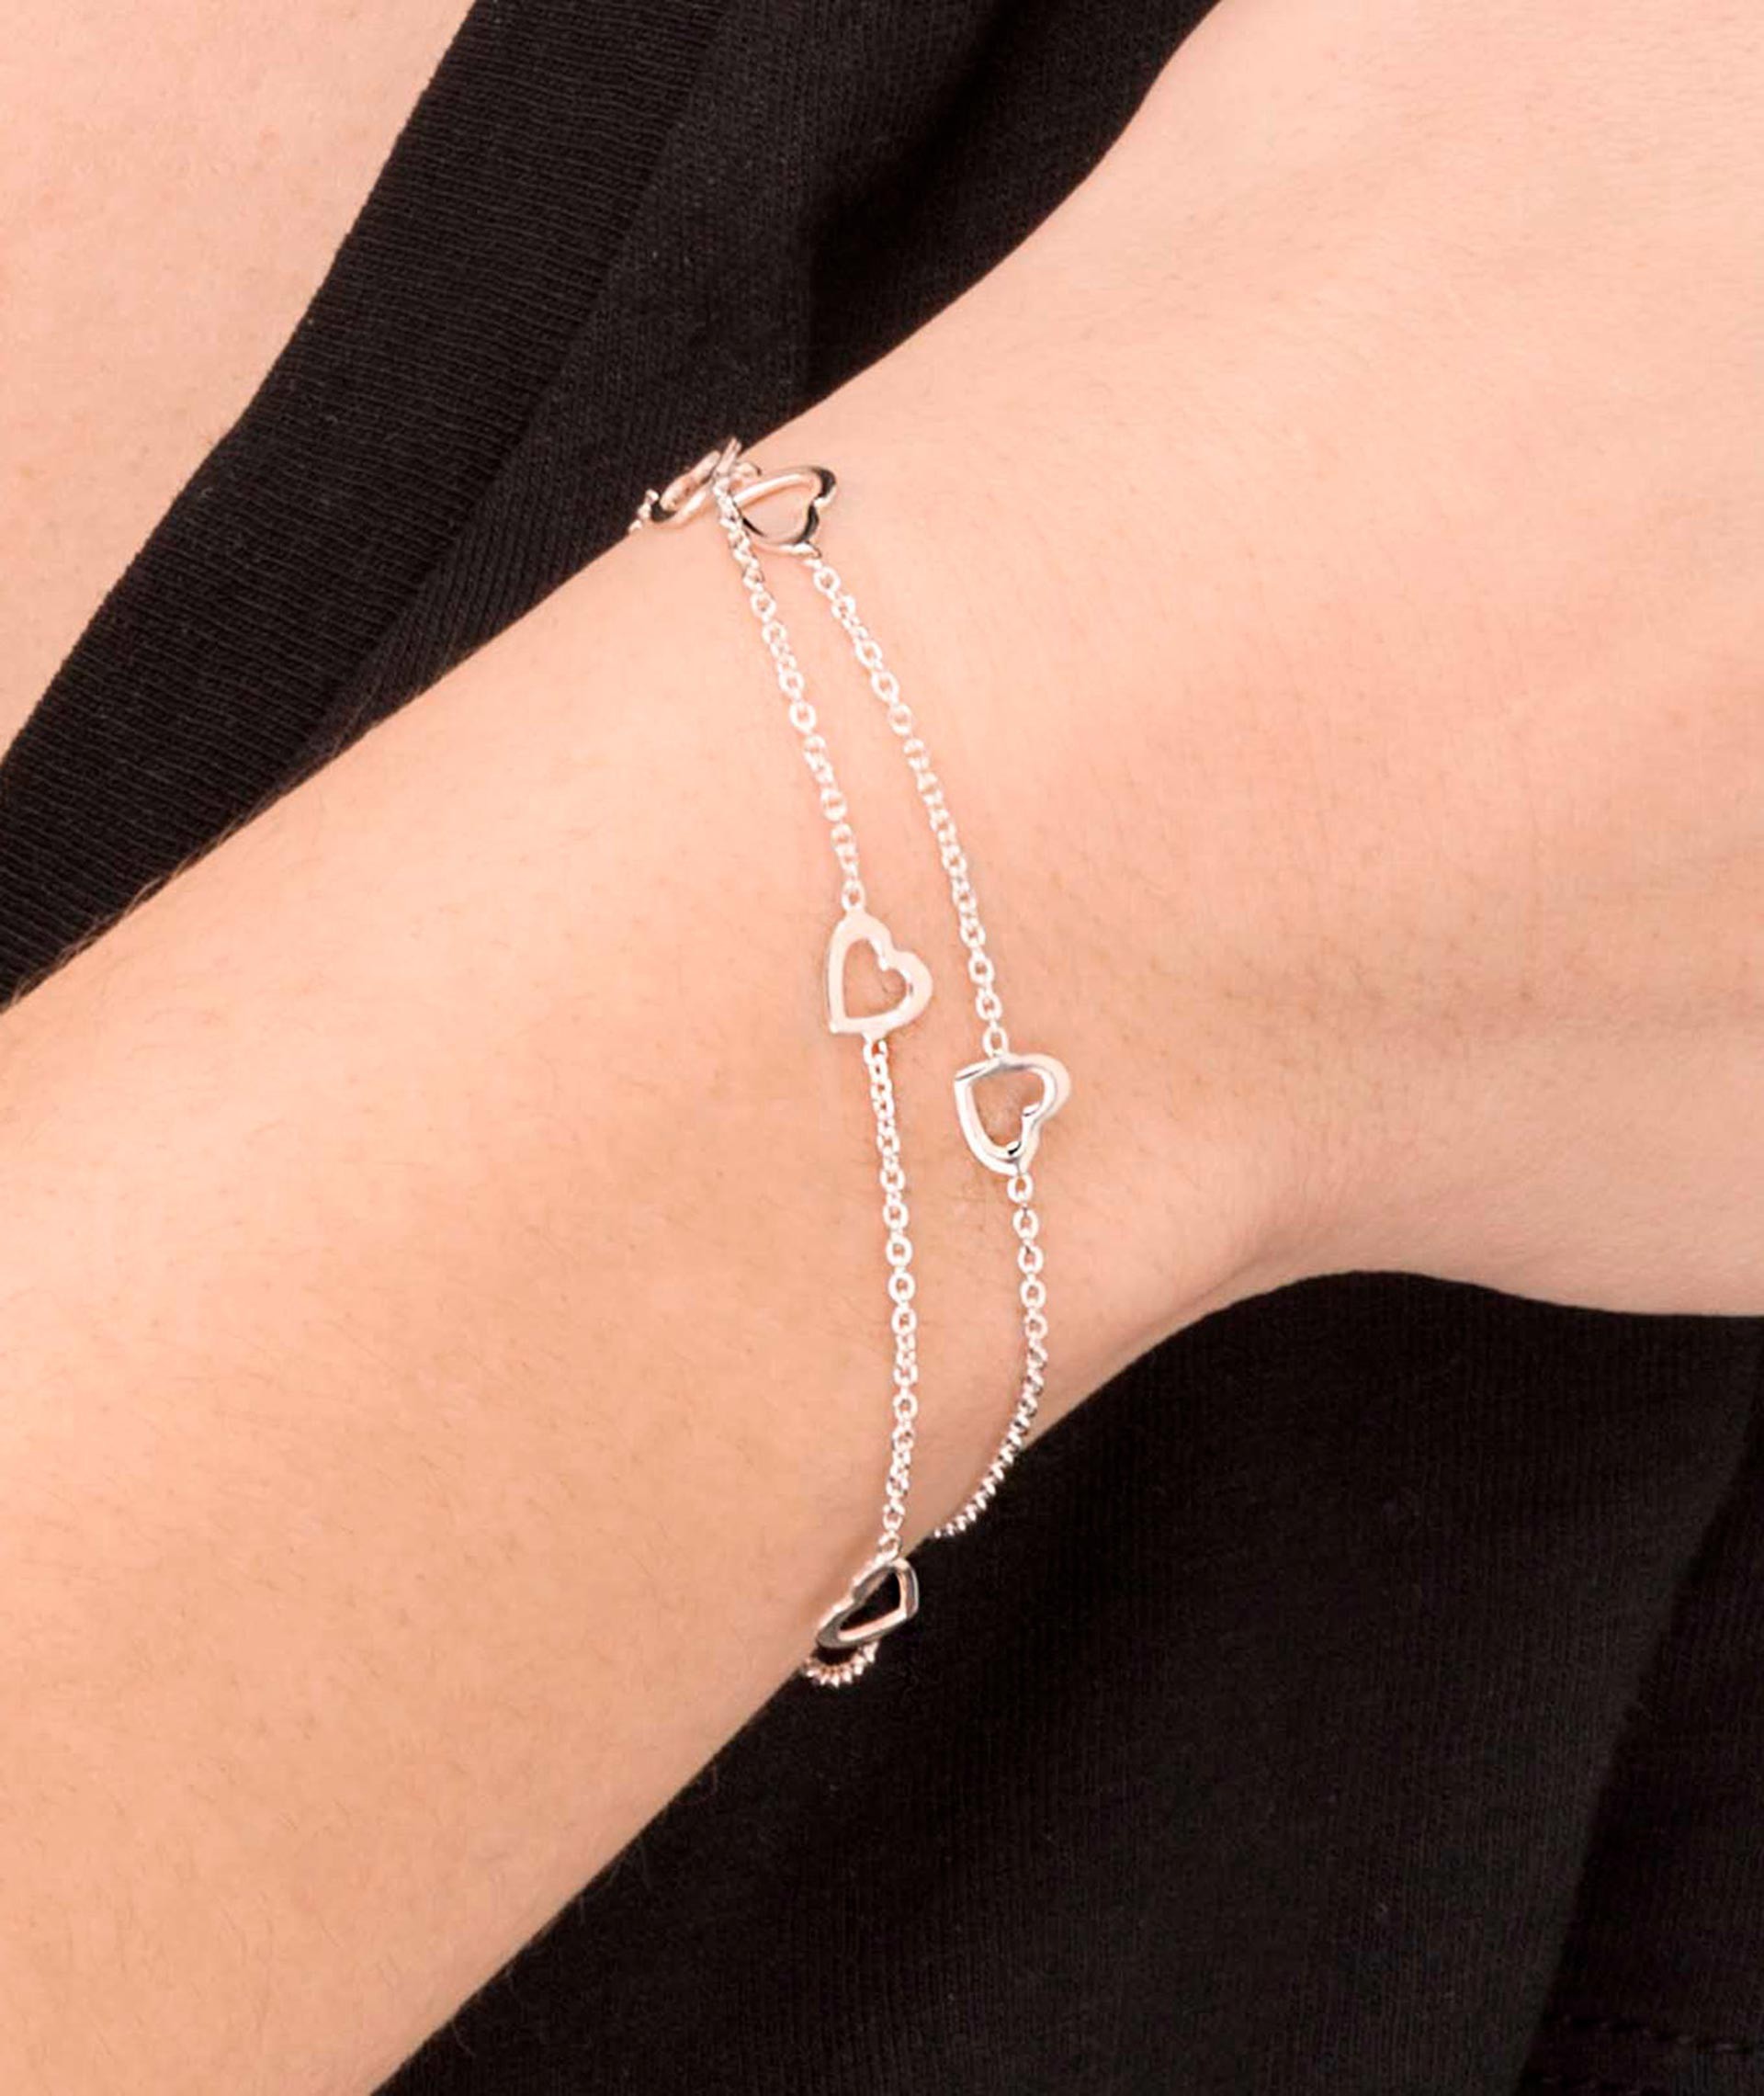 Bracelet Double Chain hearts